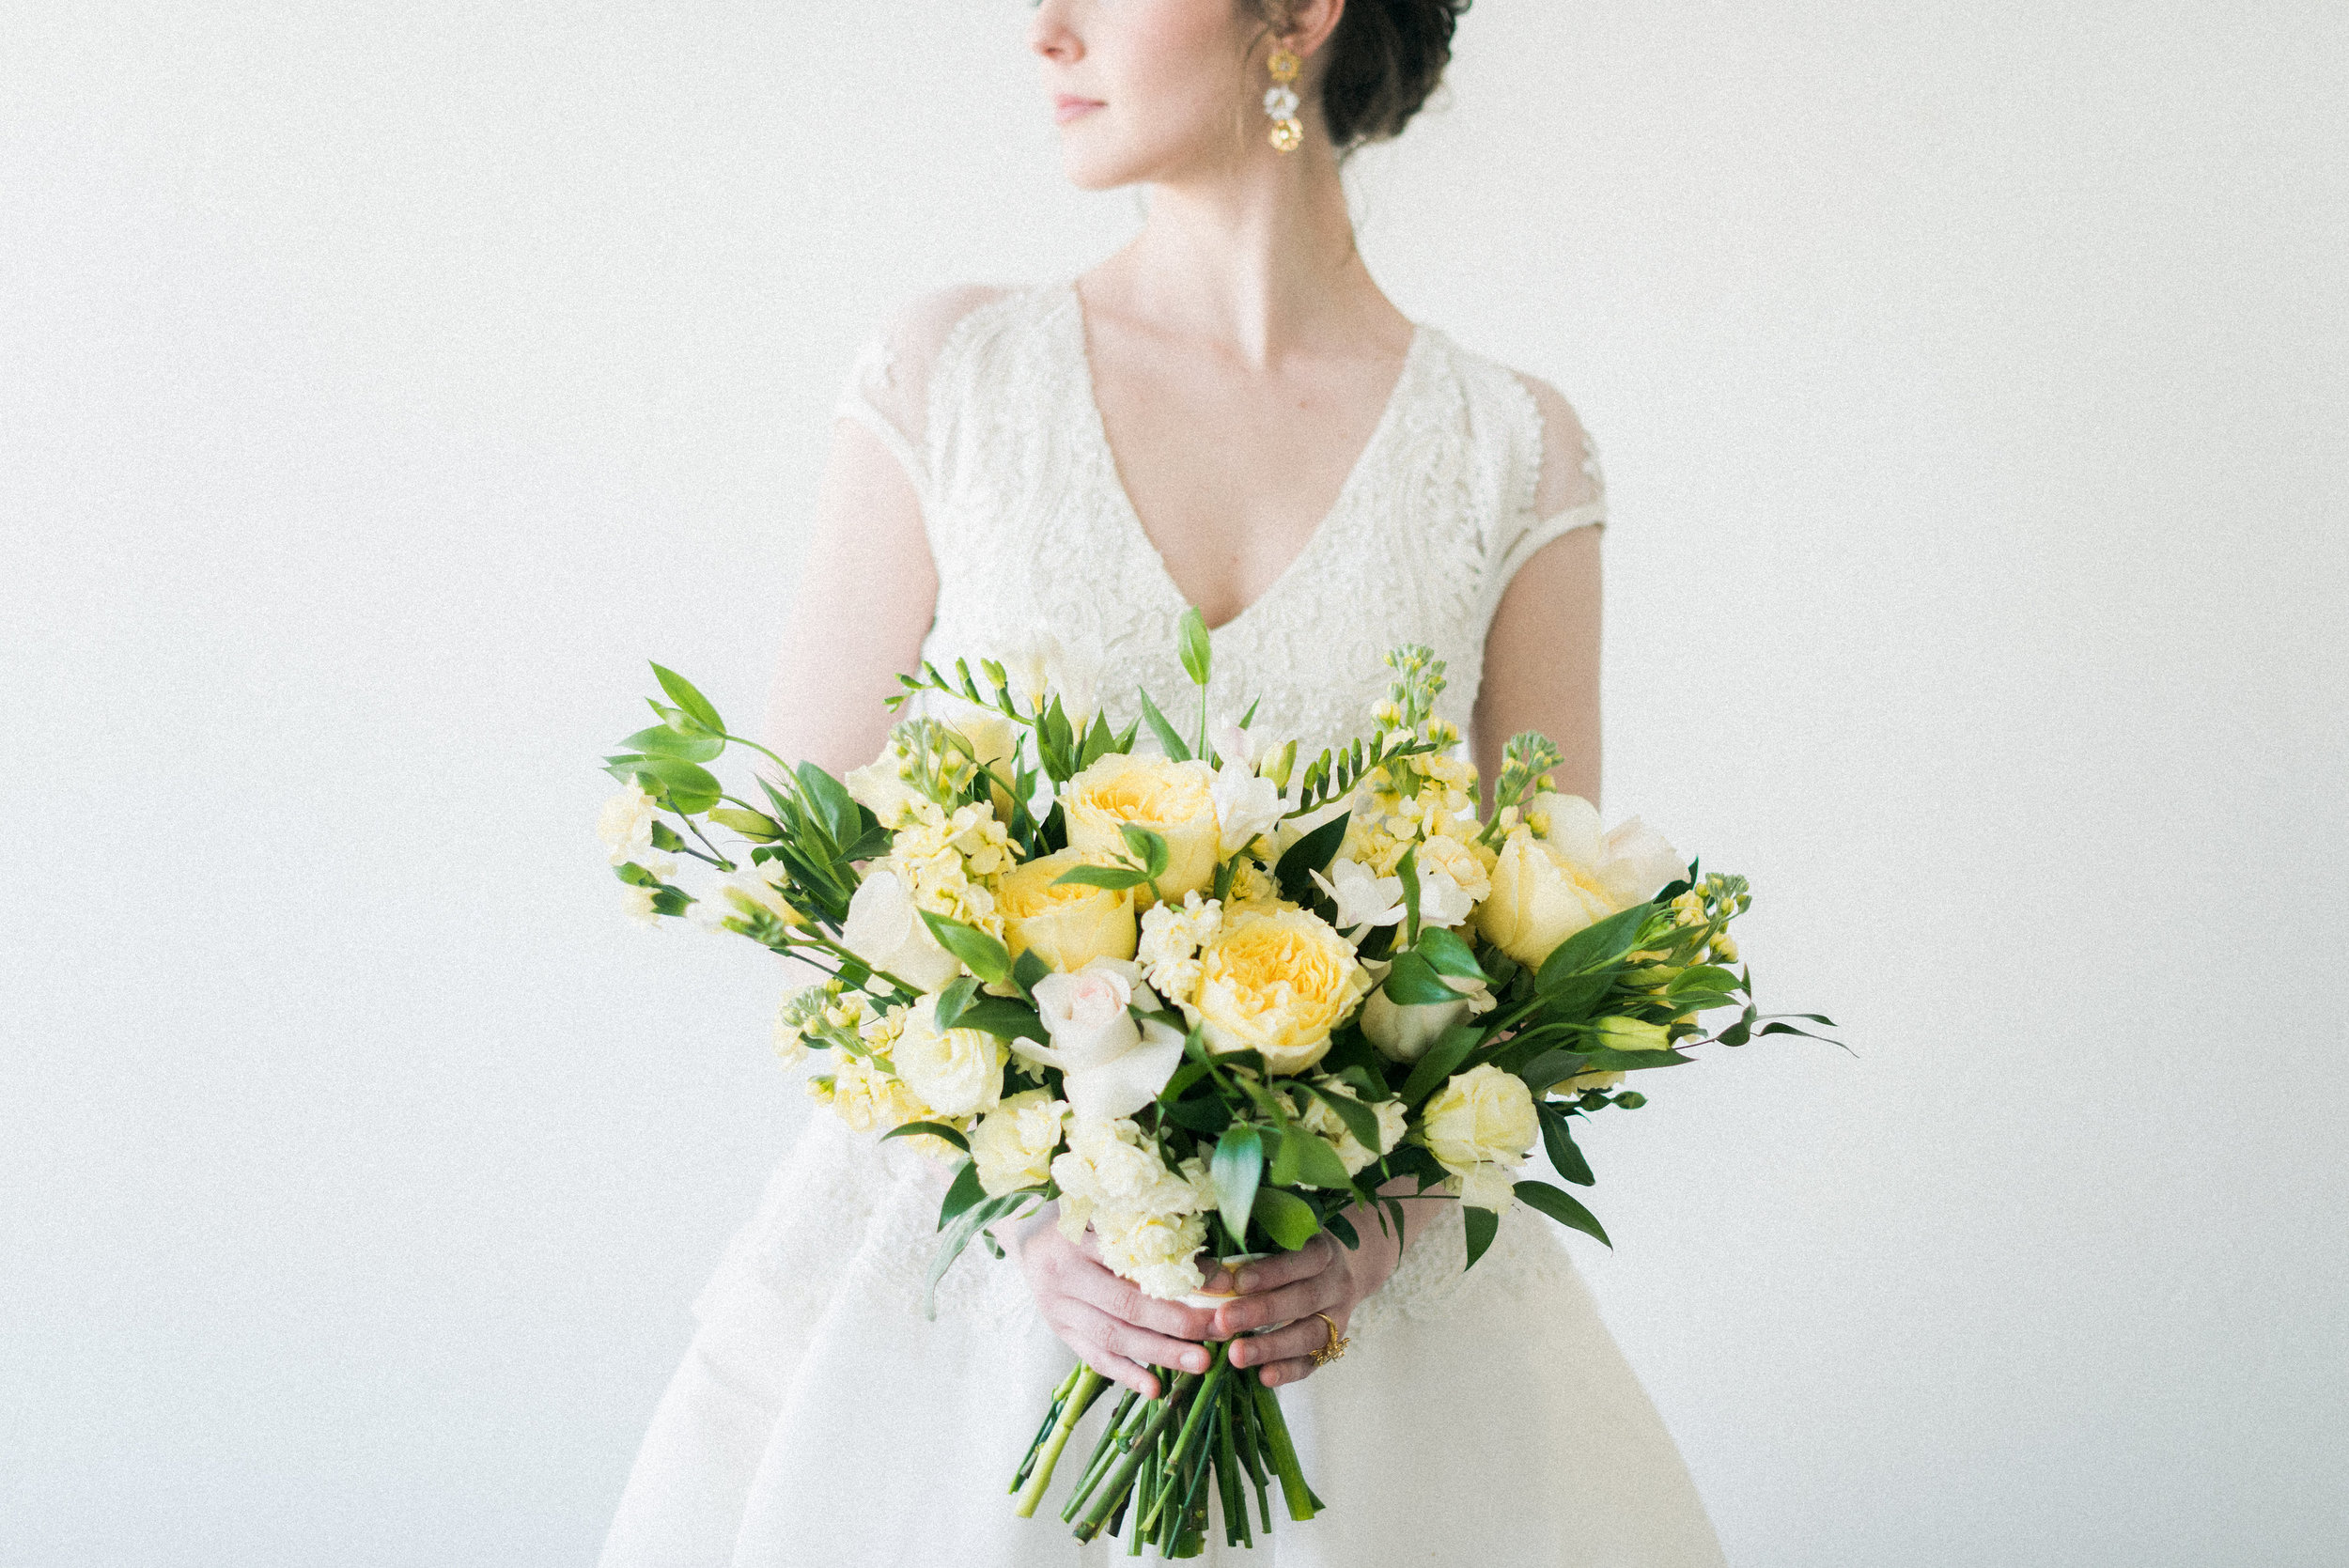  Naeem Khan "Marseille" wedding dress | Spring Bridal Inspiration from Little White Dress Bridal Shop in Denver, Colorado | Decorus Photography 